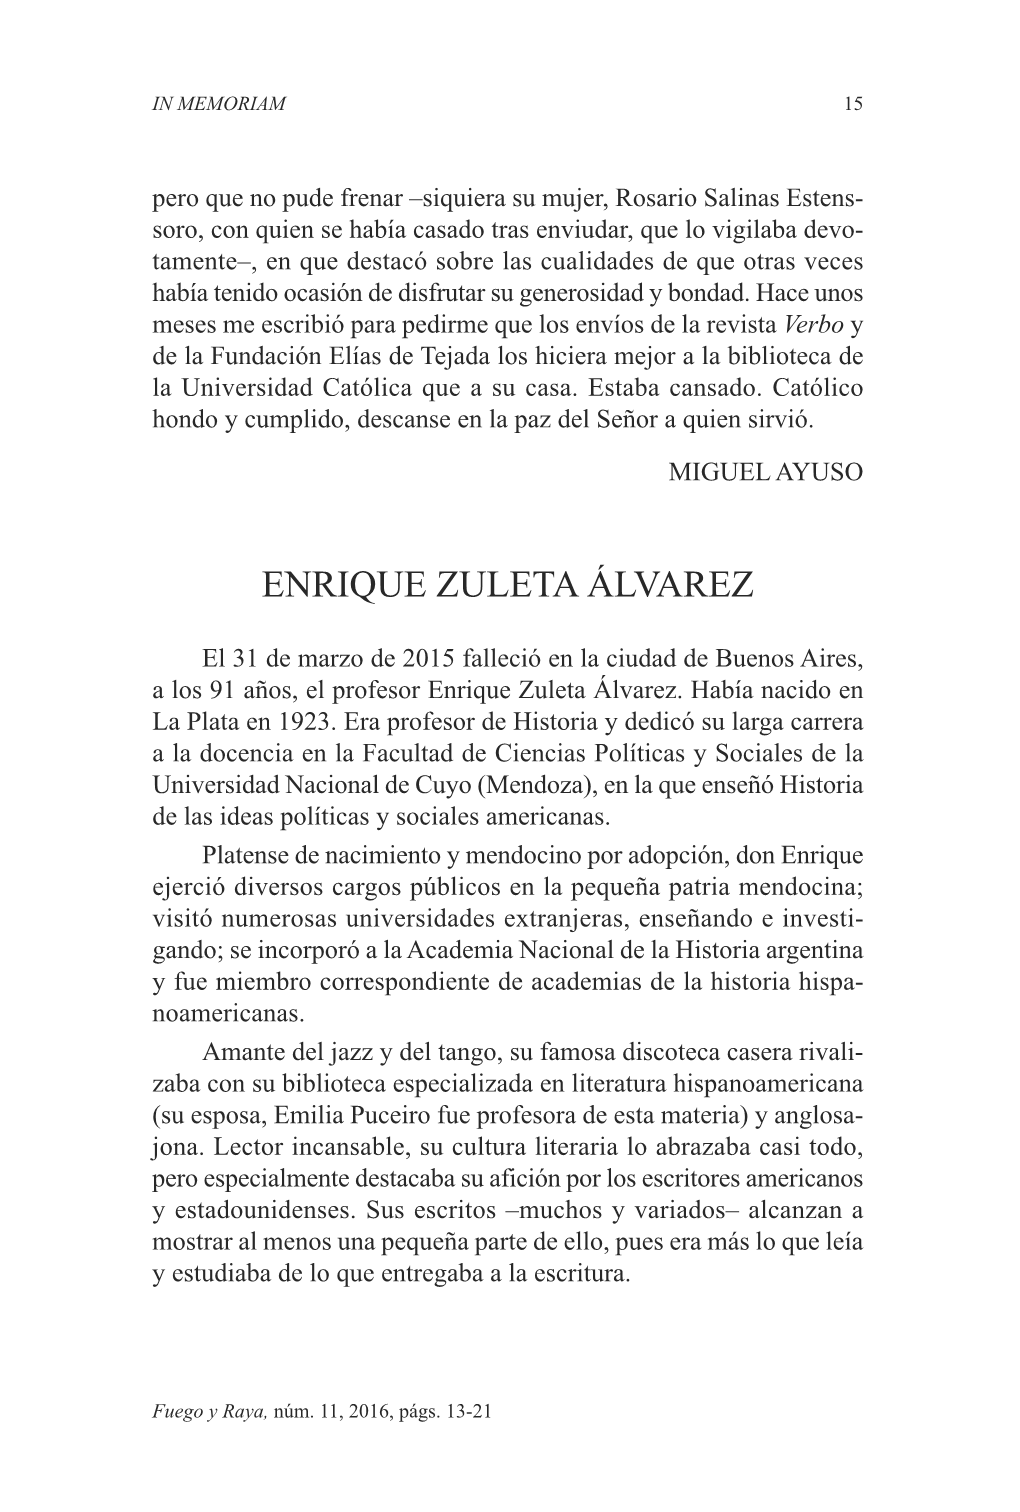 IN MEMORIAM. Enrique Zuleta Álvarez